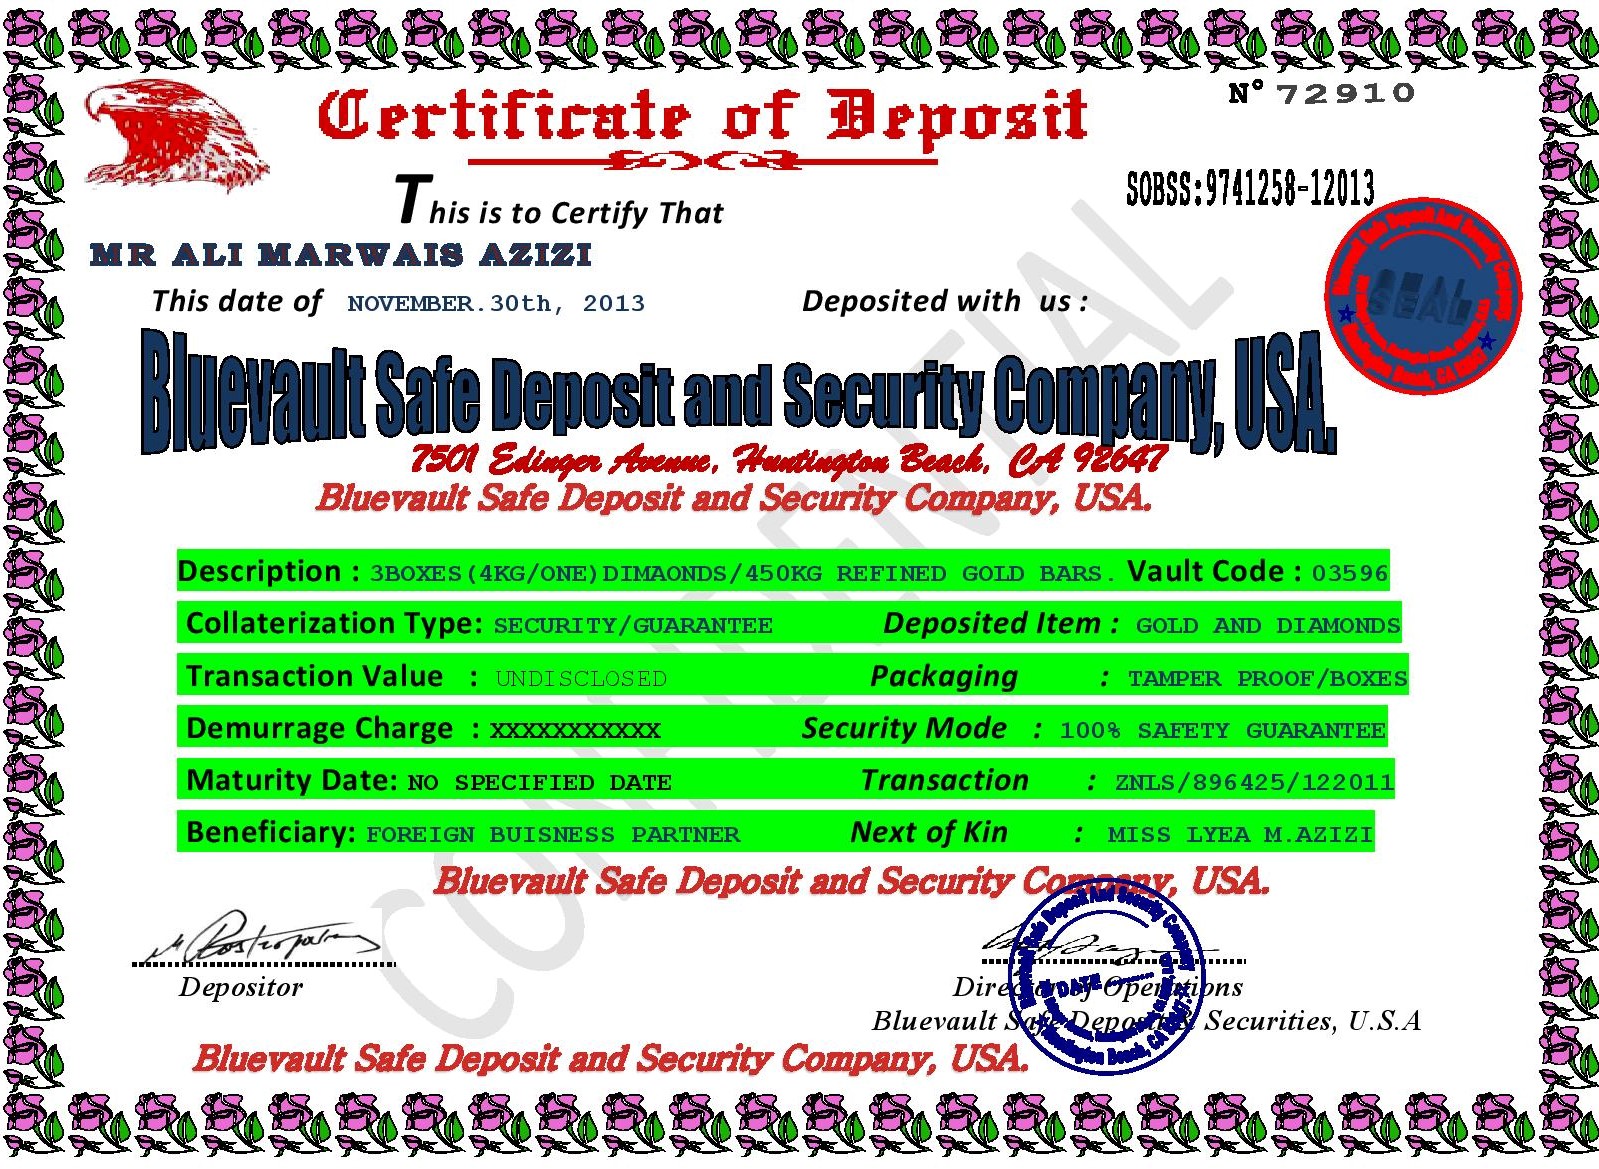 Bluevaultsecure.net scam fake certificate